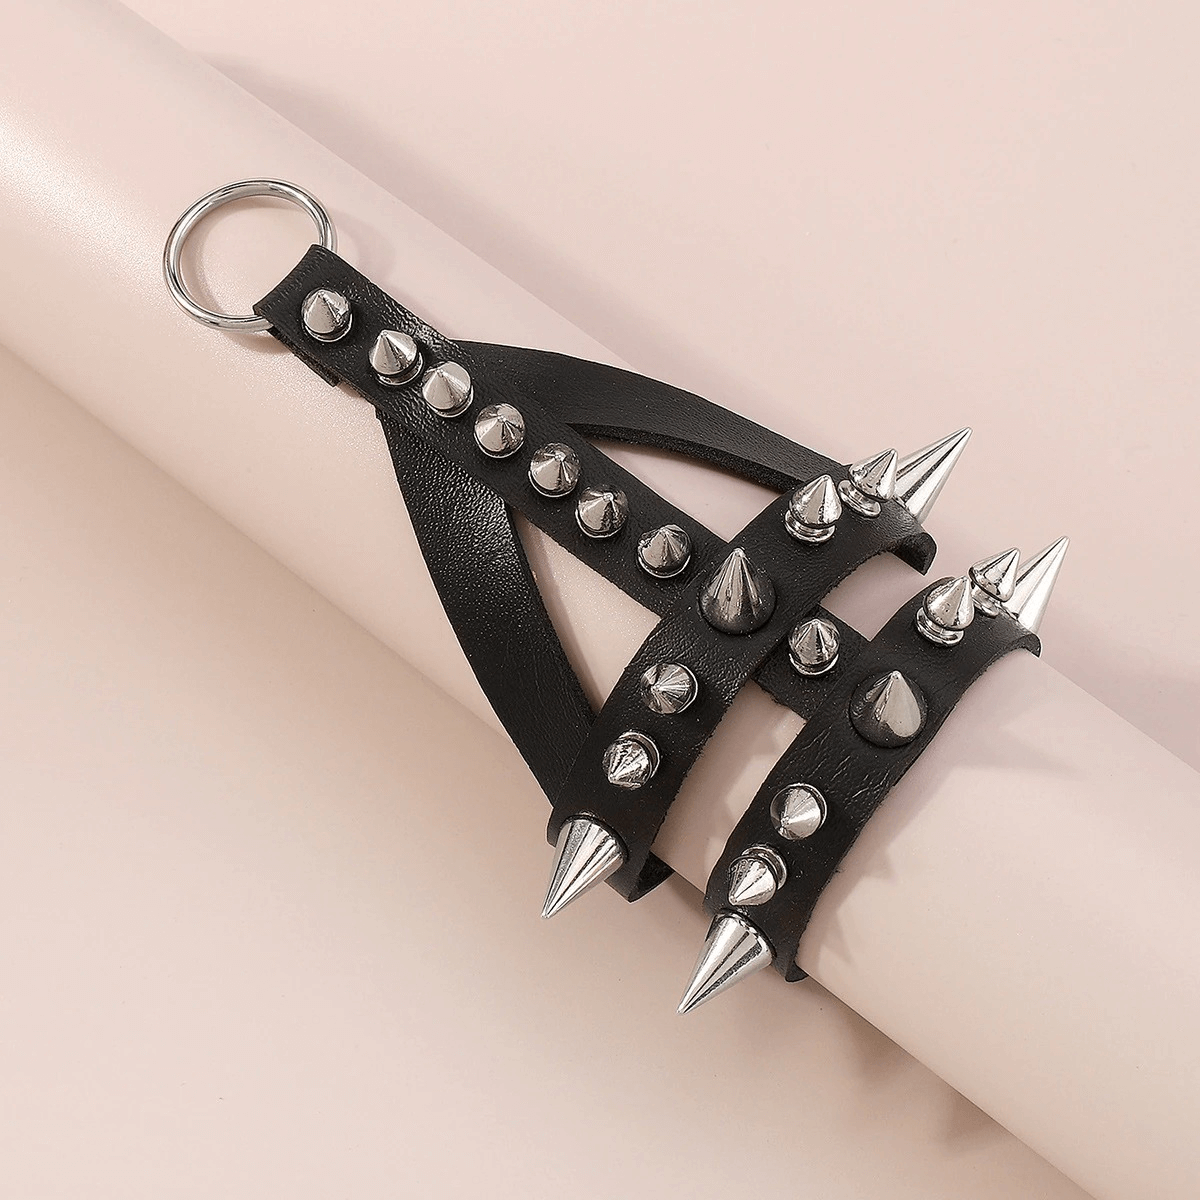 Punk Rock Style Cuspidal Spikes Bracelet / Metal Studded Leather Wristband